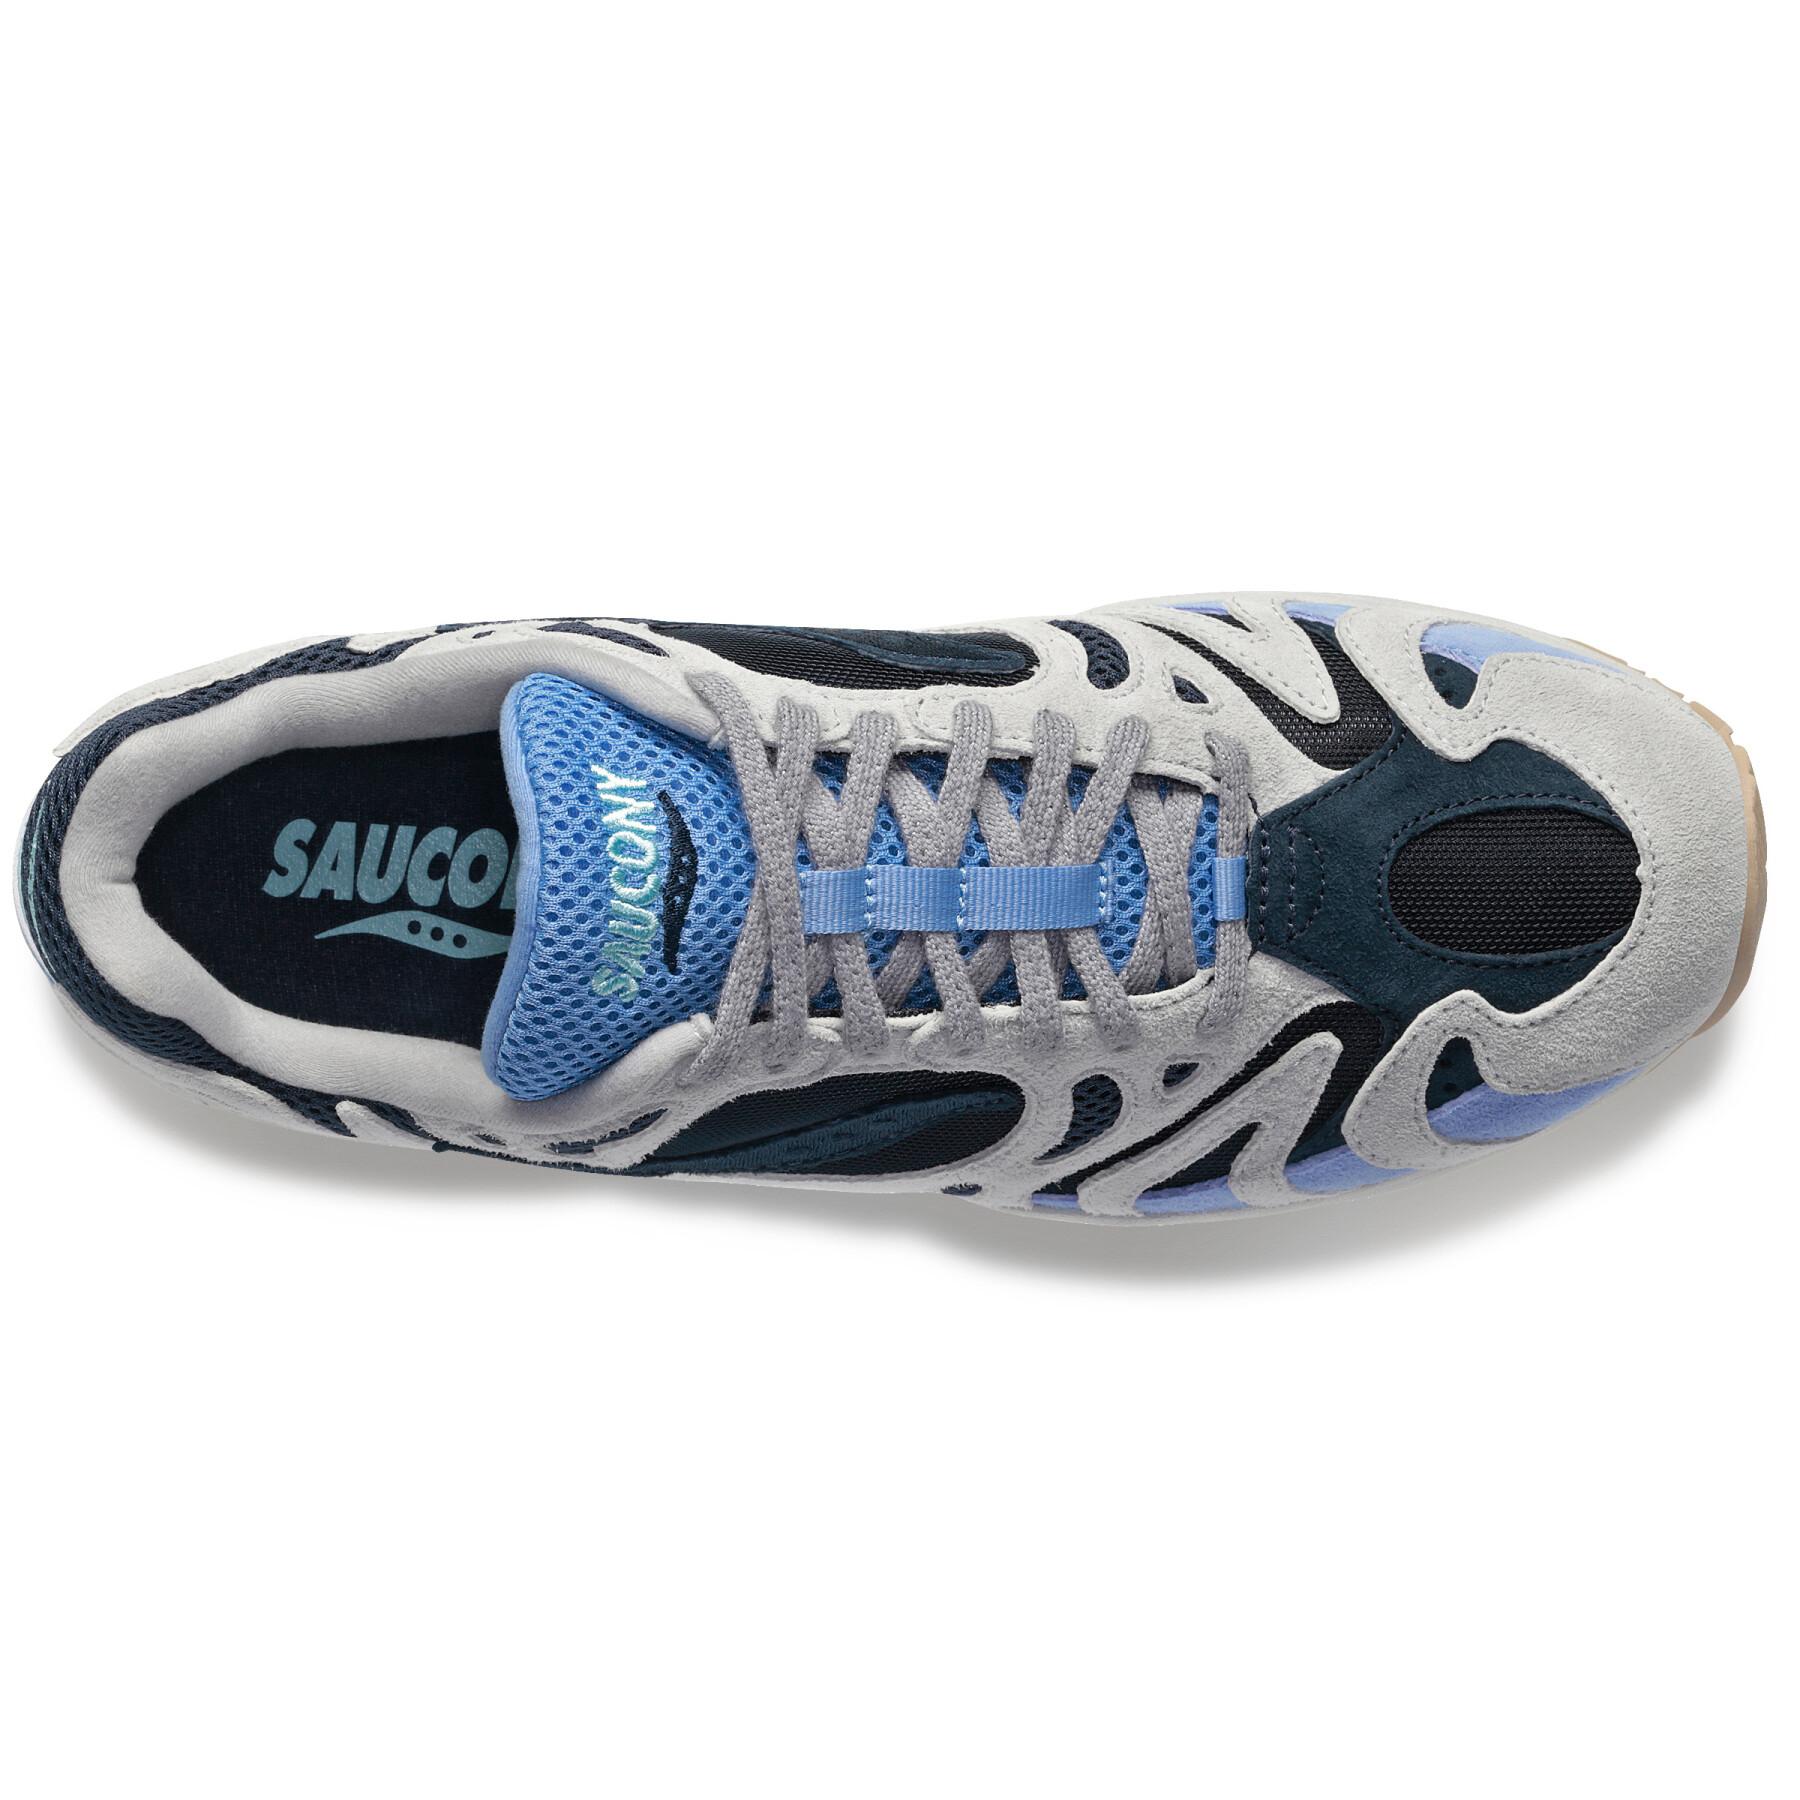 Schuhe Saucony GRID AZURA 2000